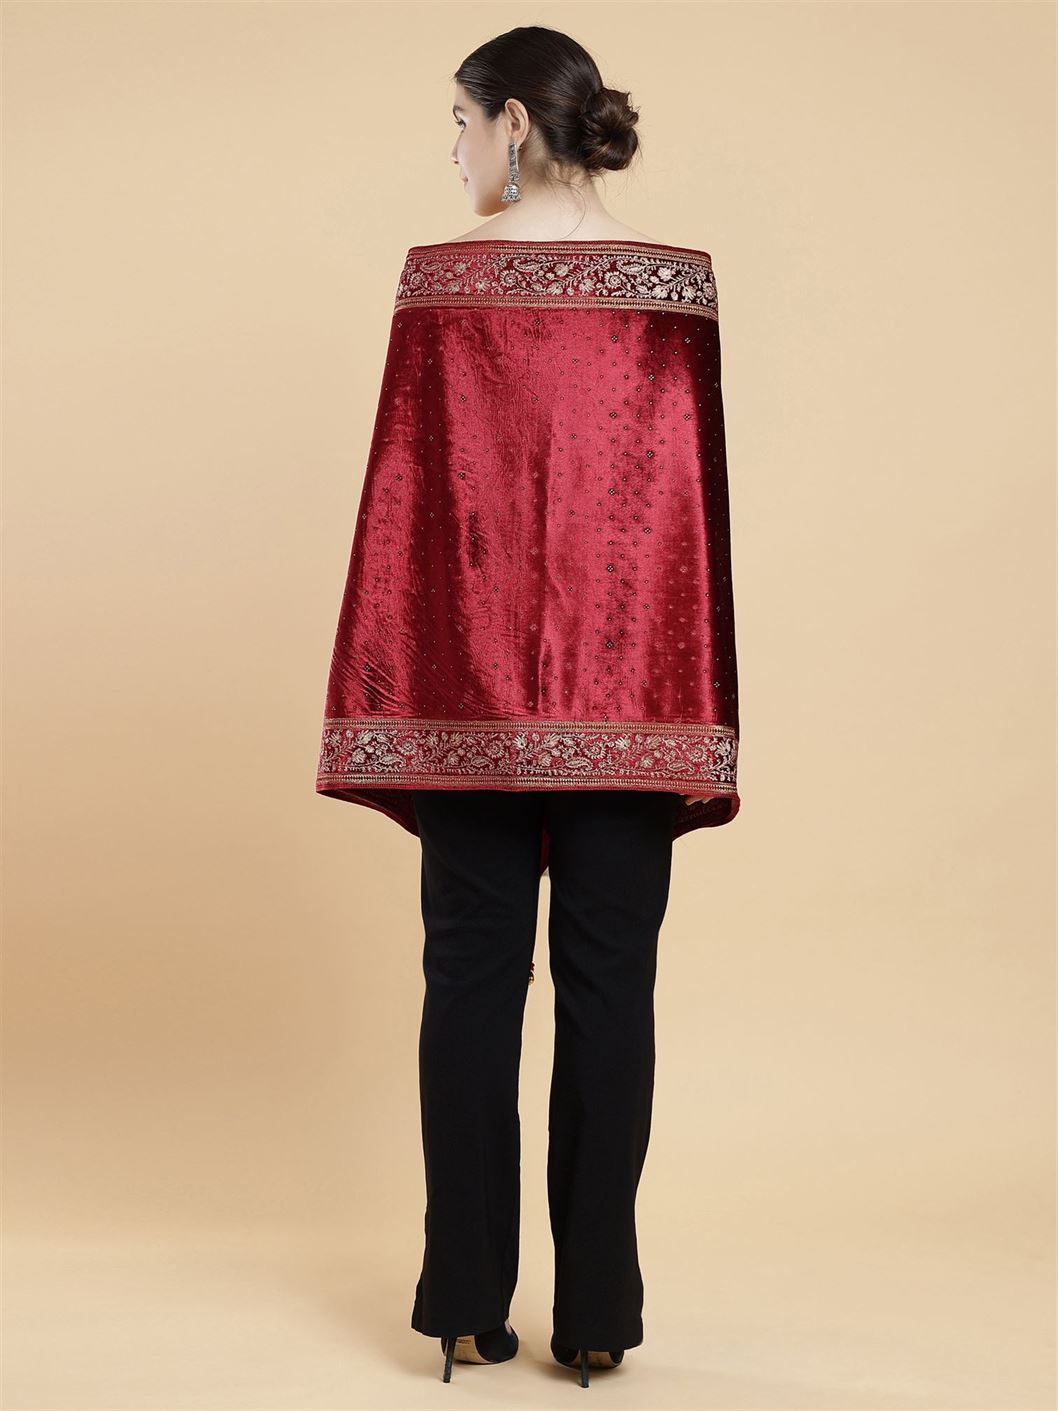 maroon-embellished-velvet-stole-mchsvd1629m-moda-chales-7